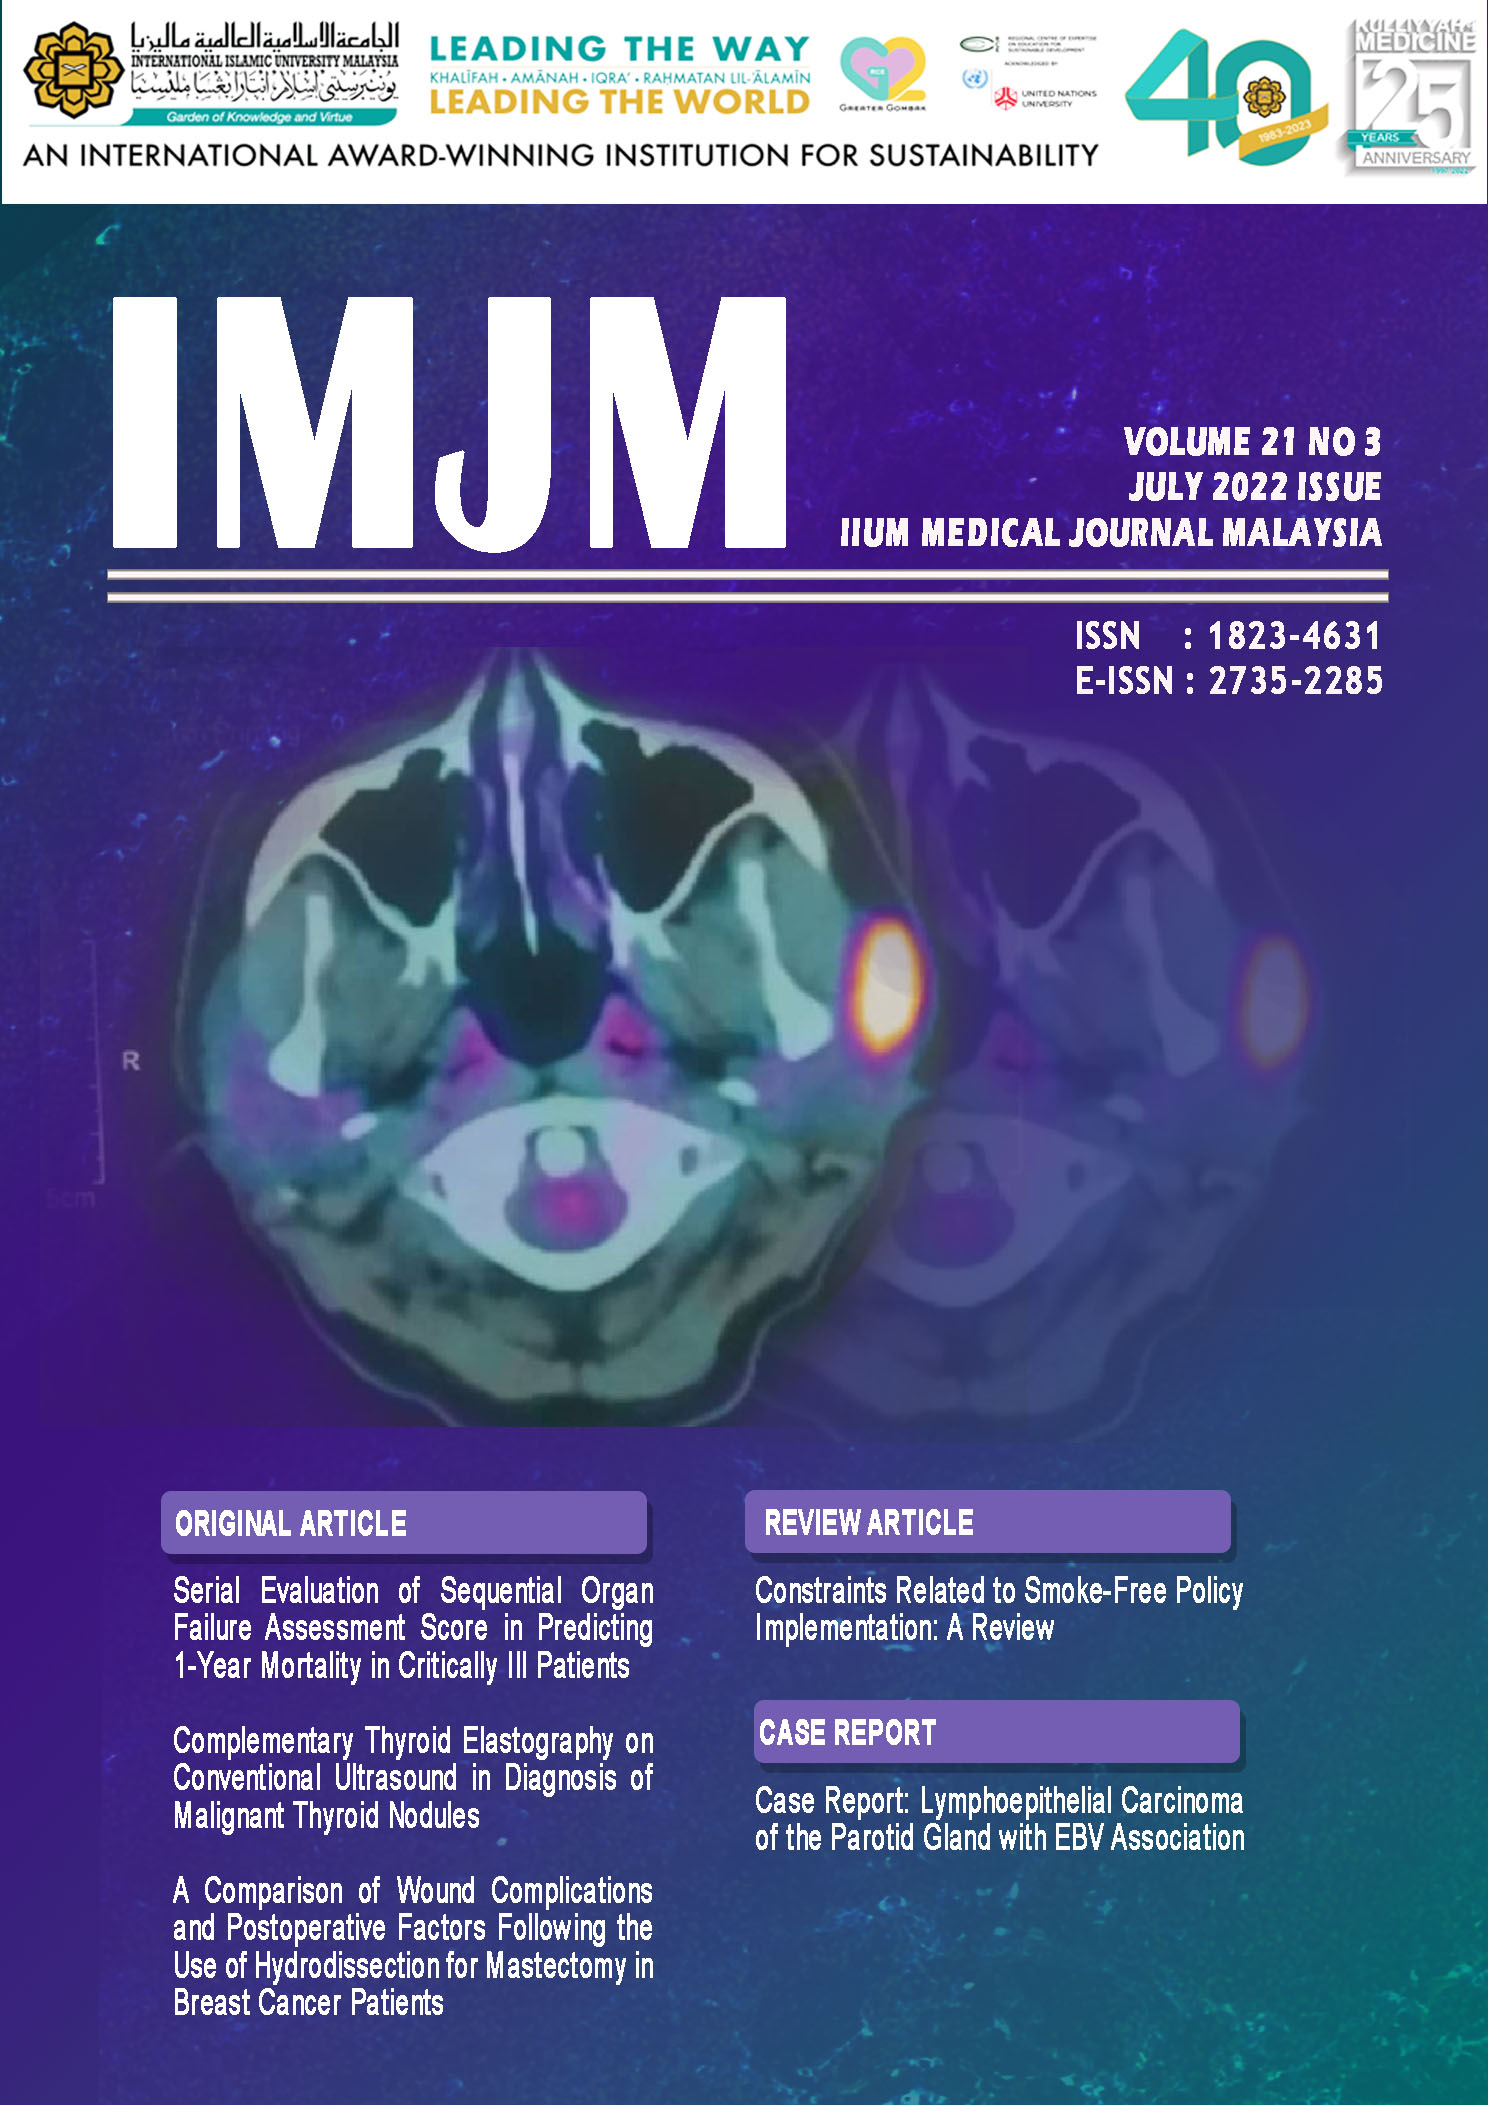 					View Vol. 21 No. 3 (2022): IIUM Medical Journal Malaysia - July 2022
				